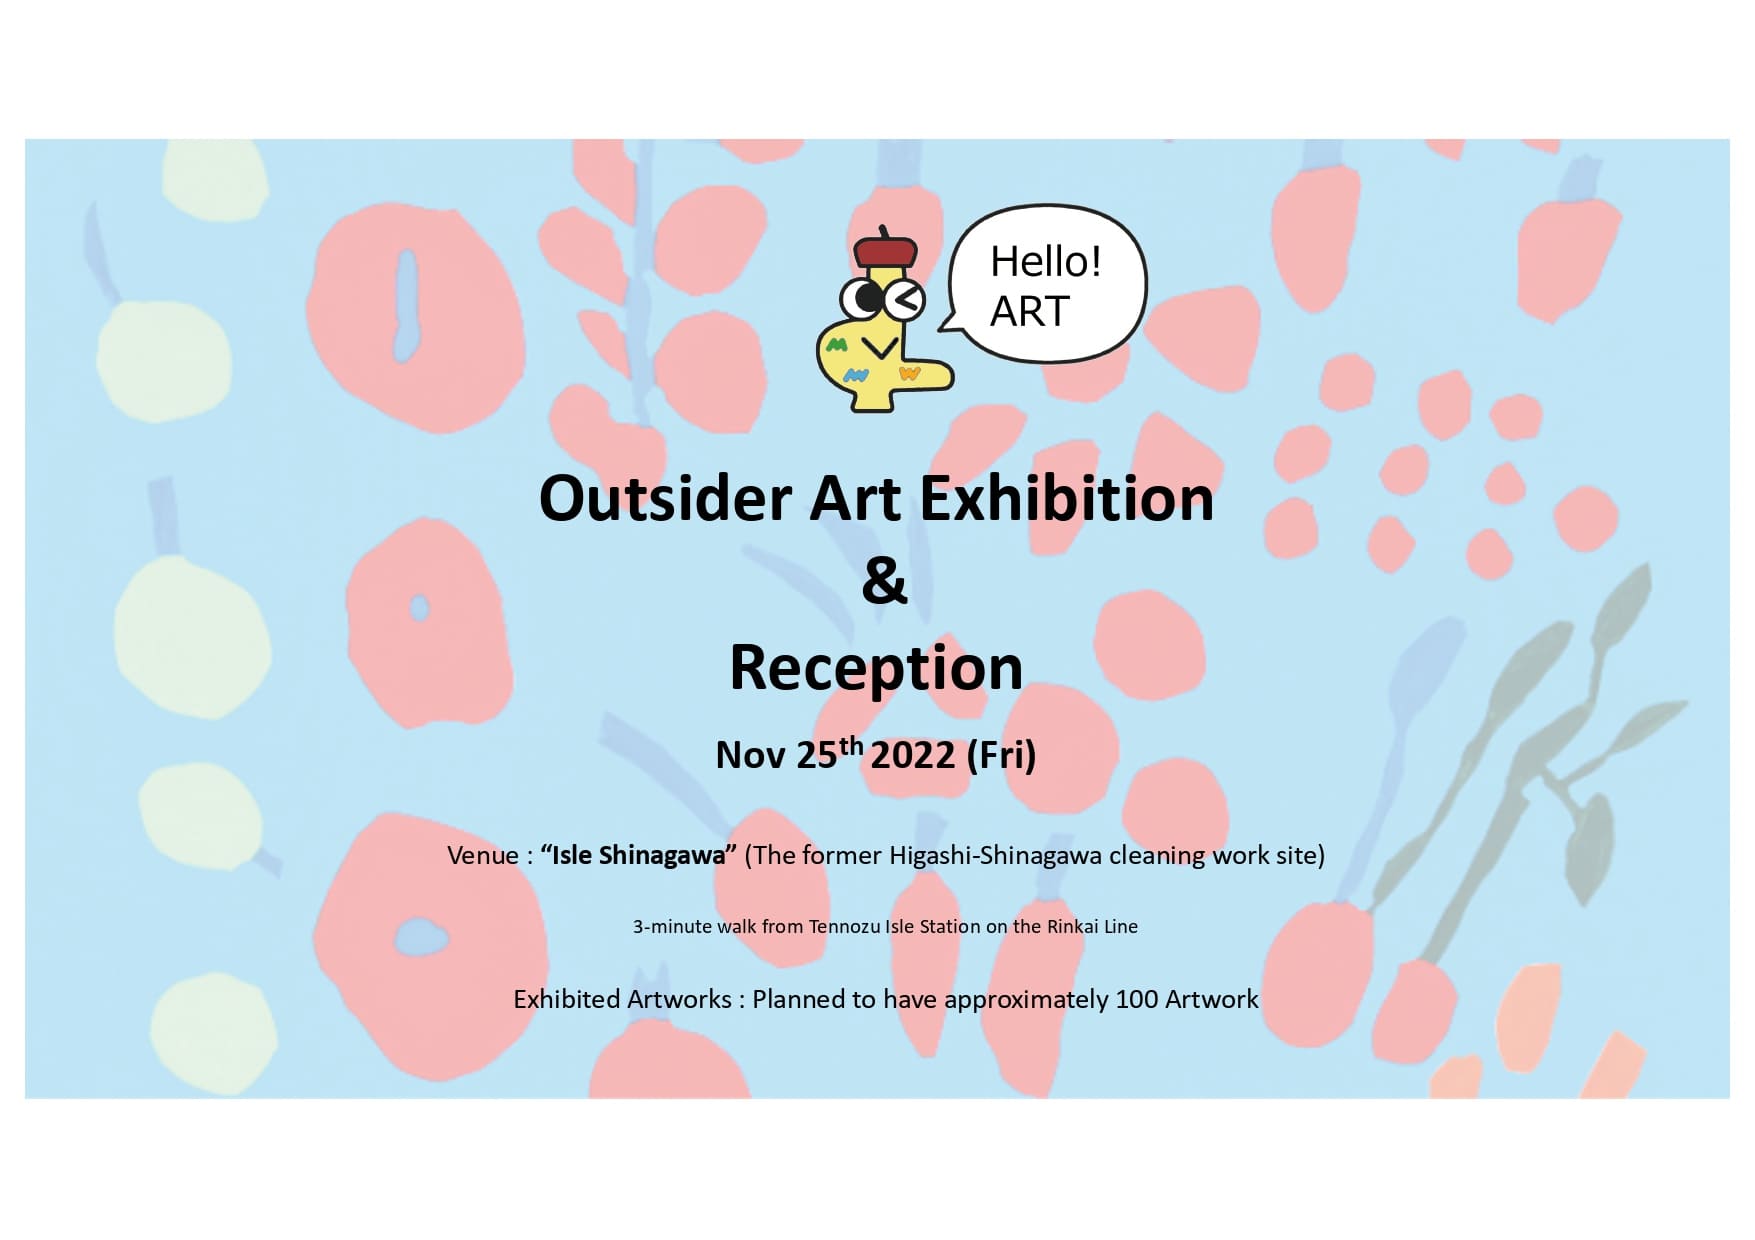 Outsider Art Exhibition & Reception